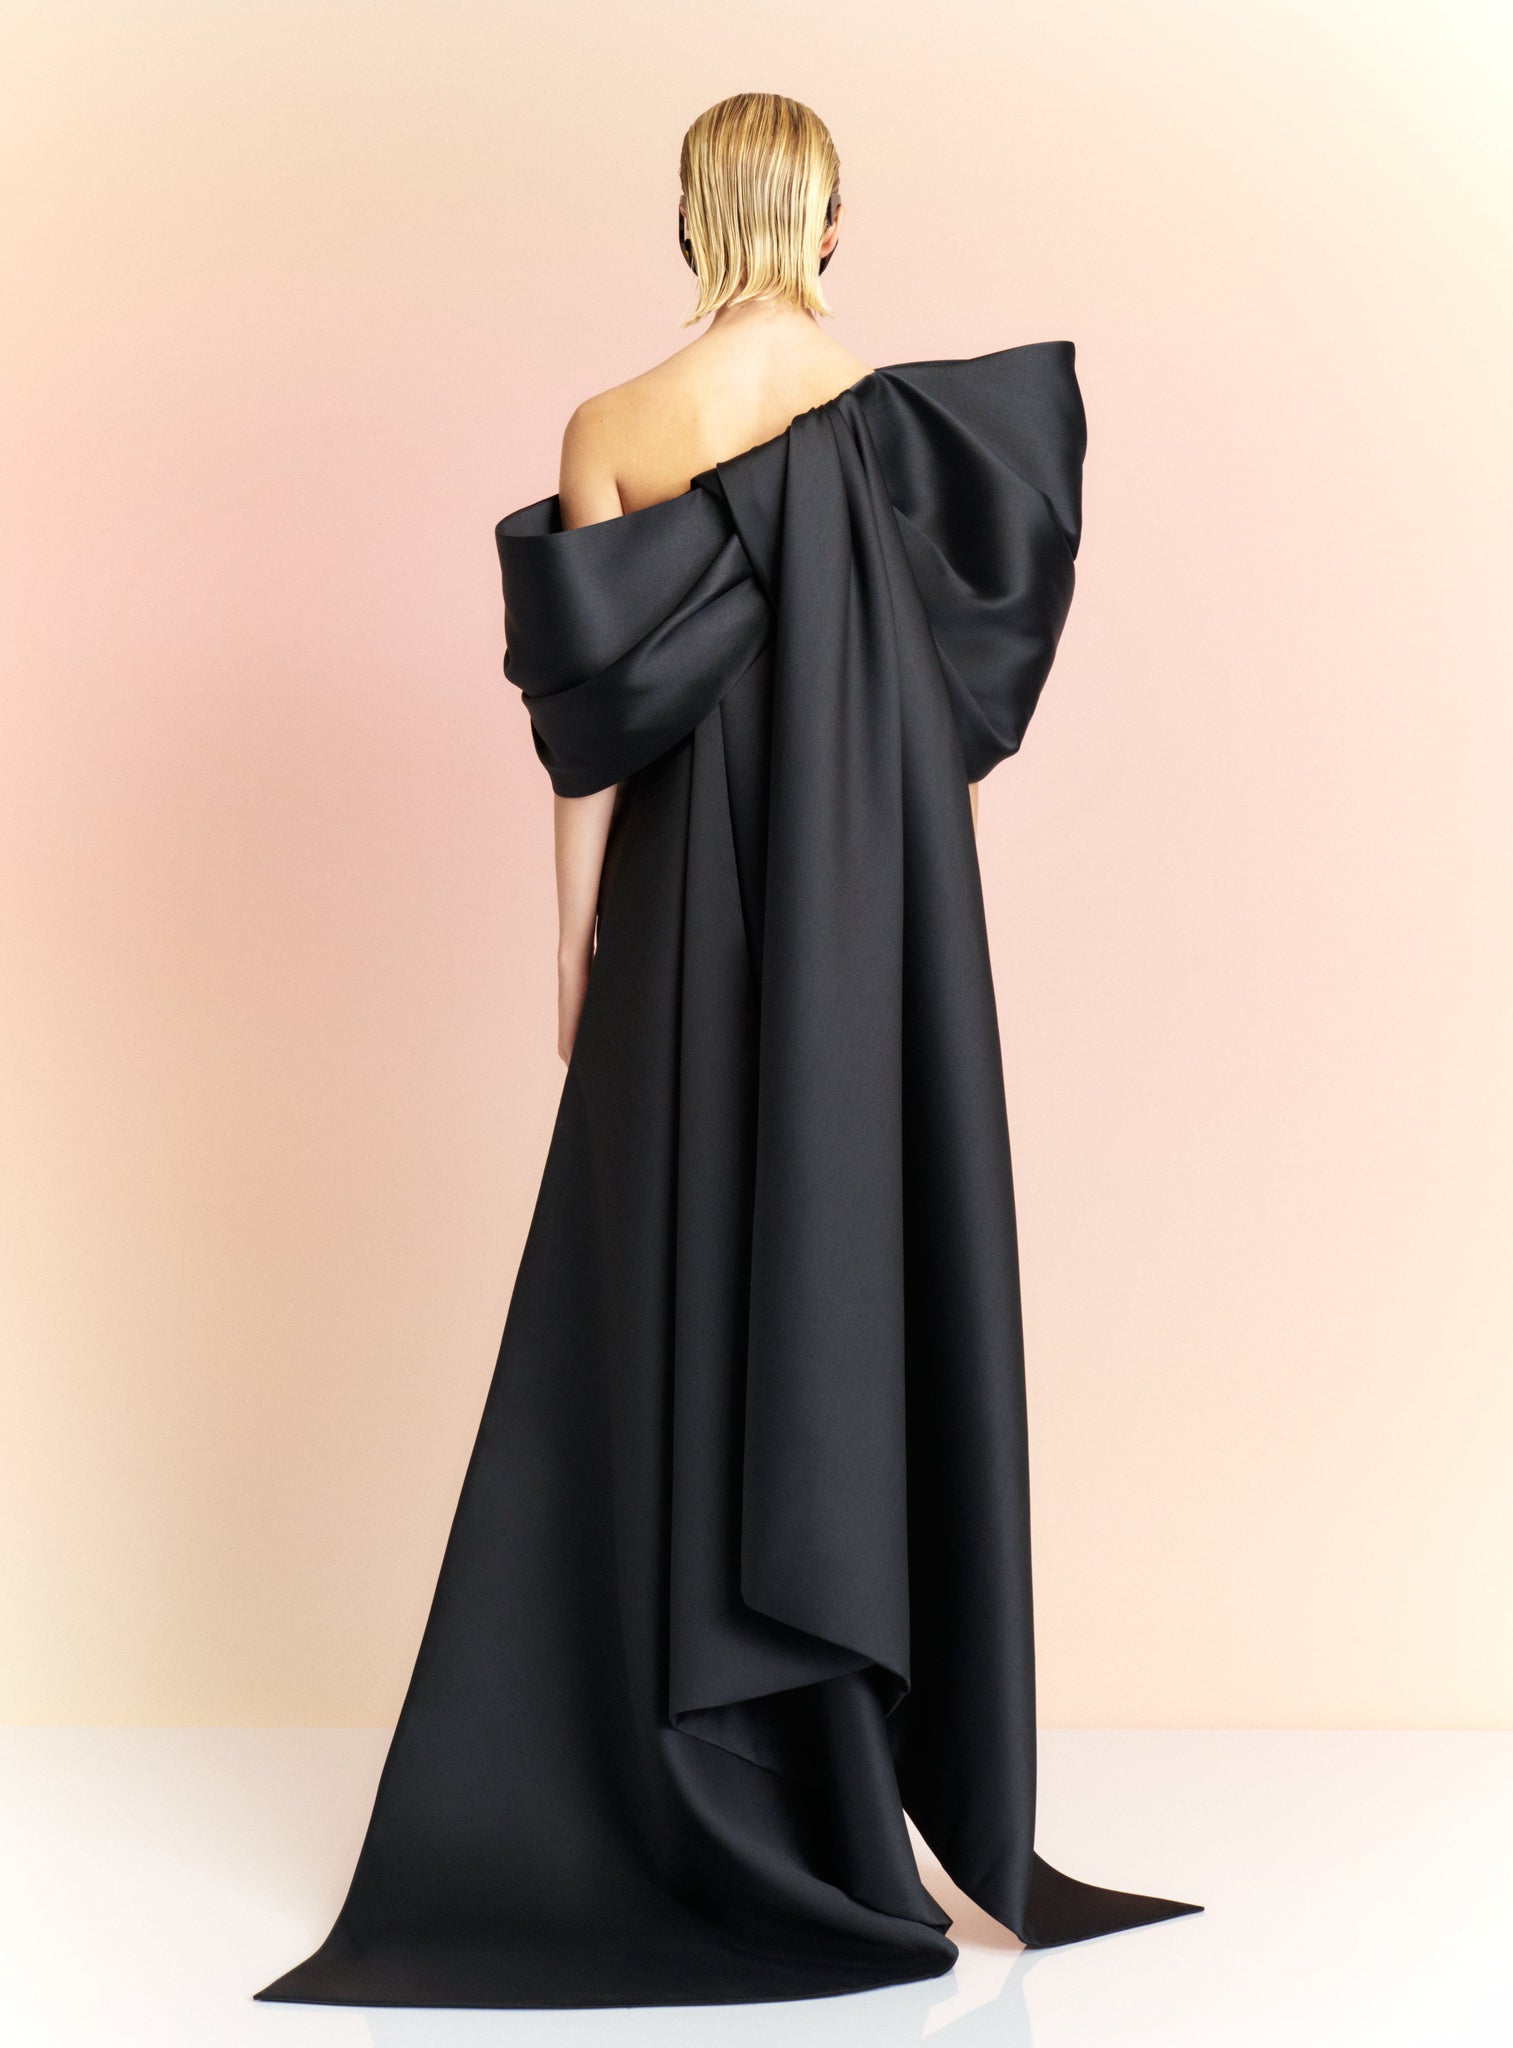 The Ula Mini Dress in Black